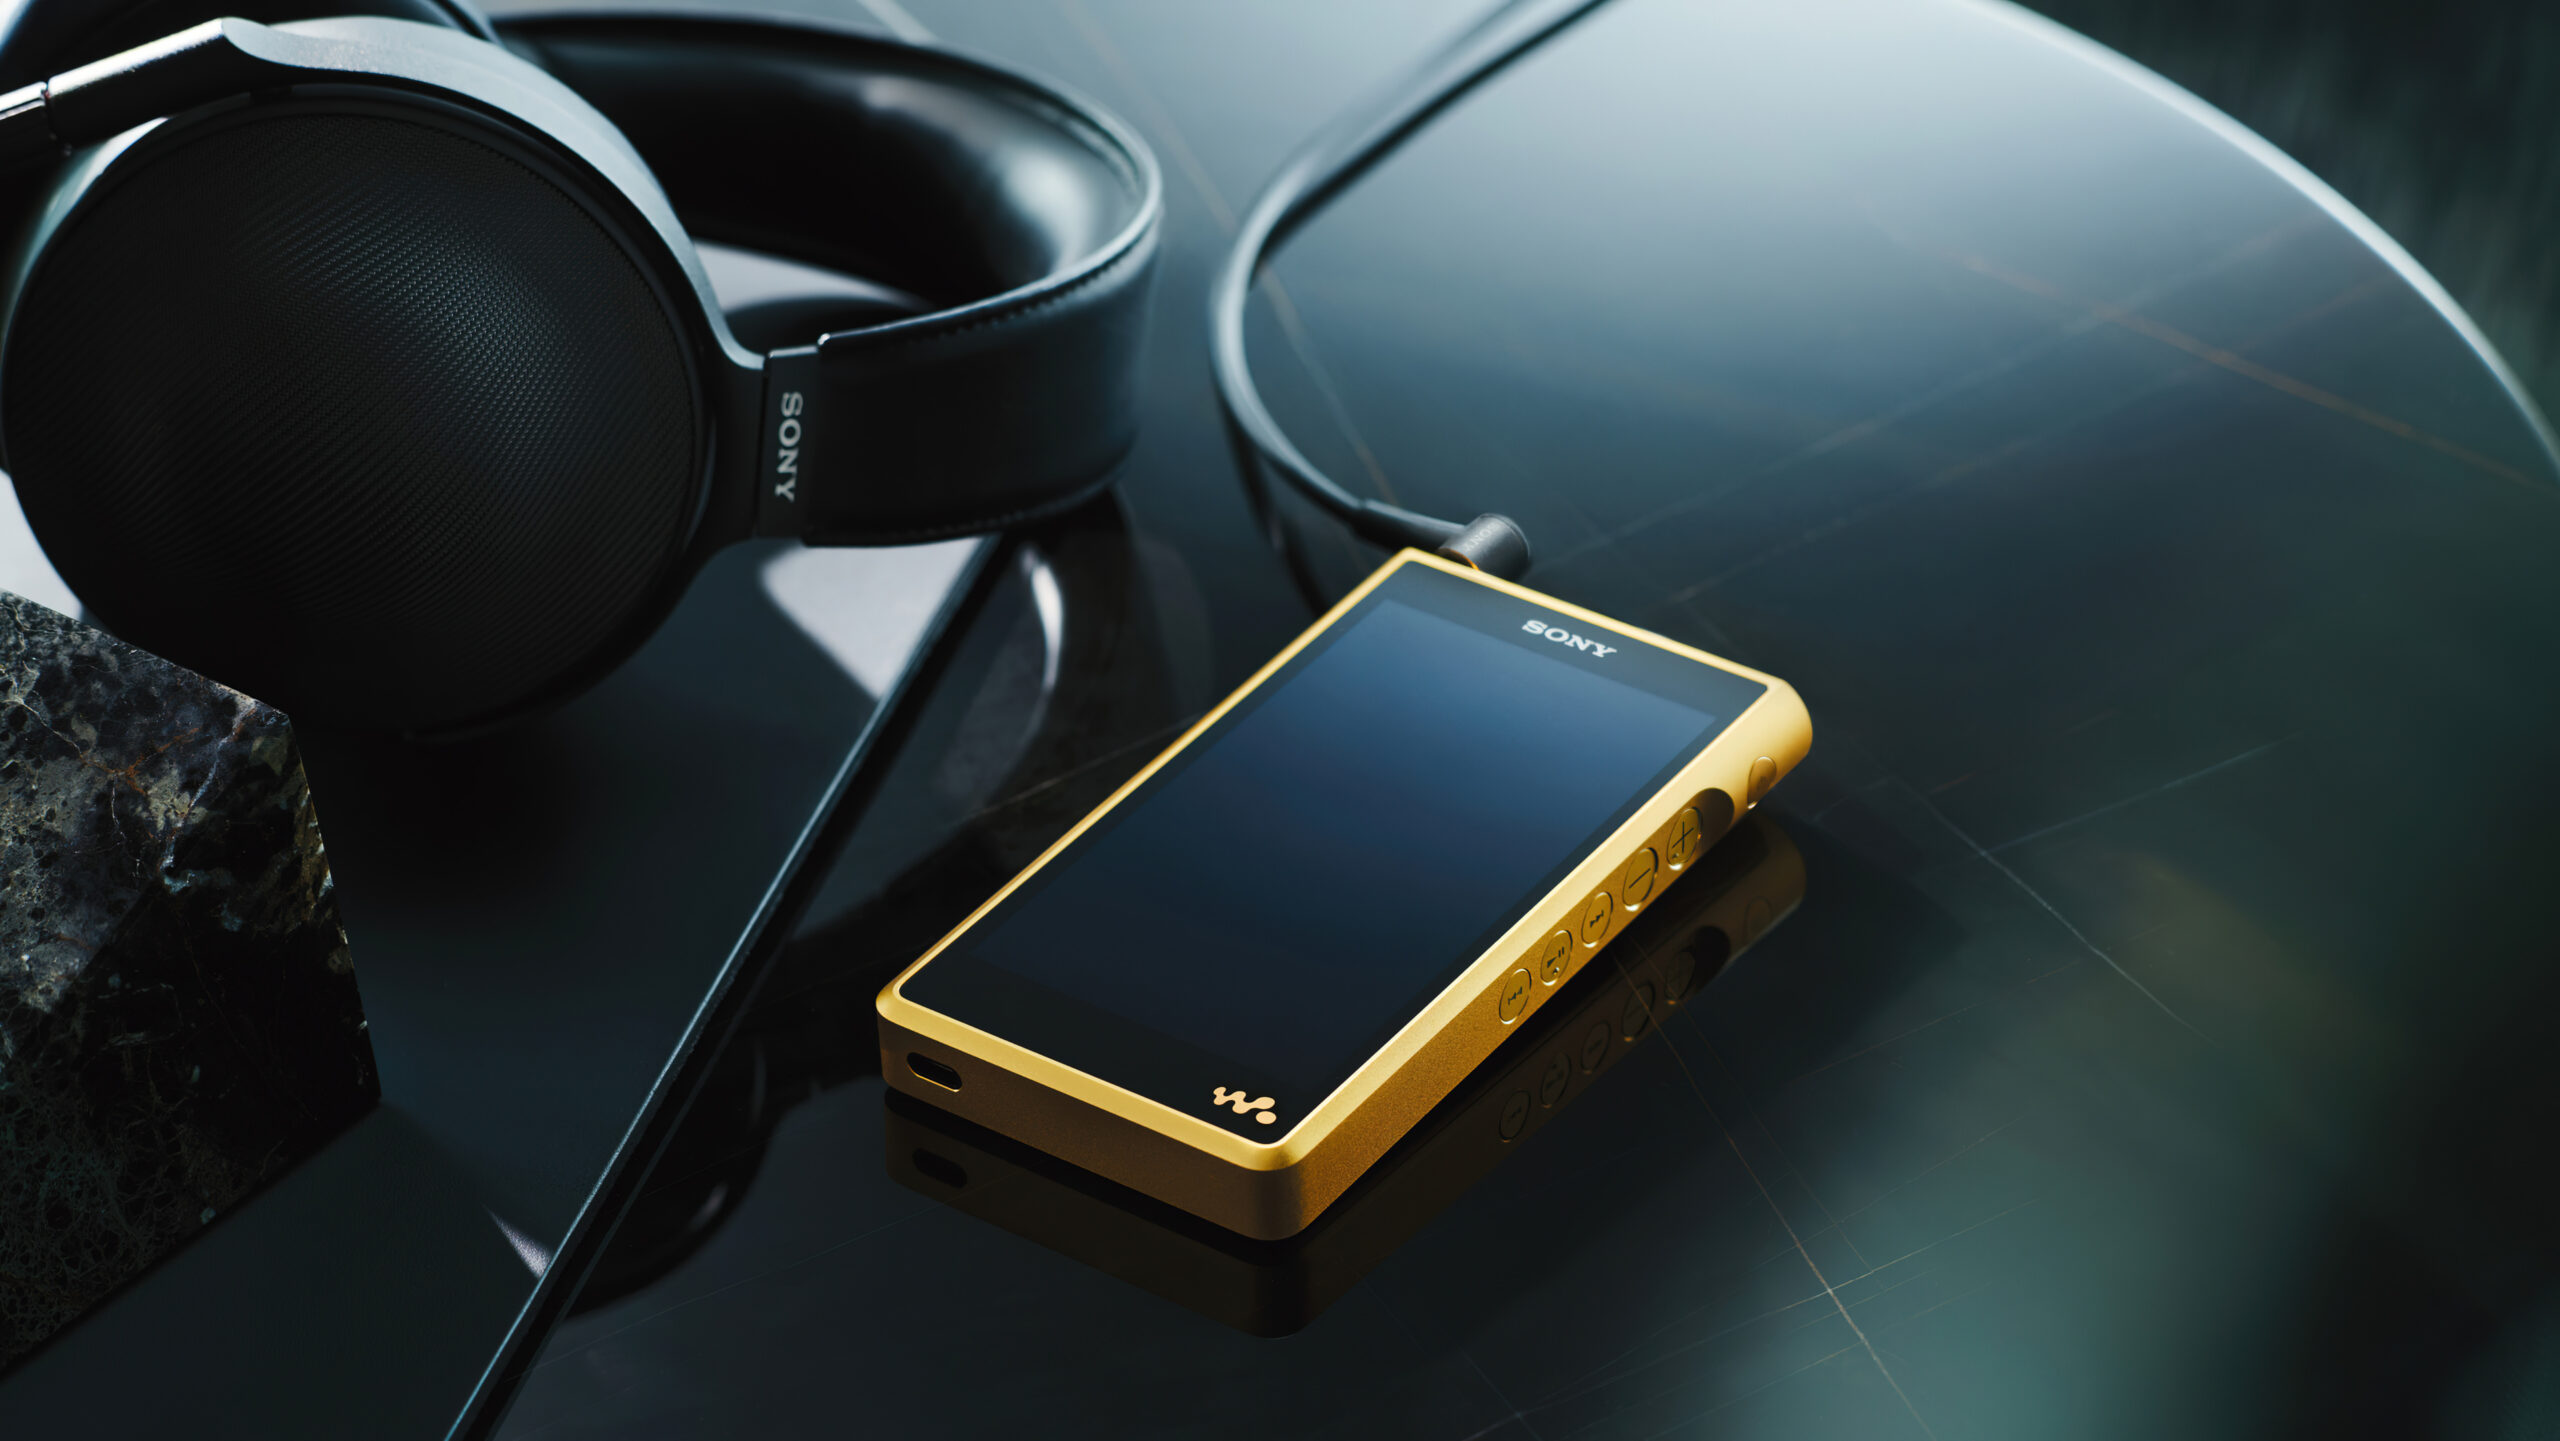 Review: Sony Walkman NW-WM1ZM2 | Don't Buy The European Version